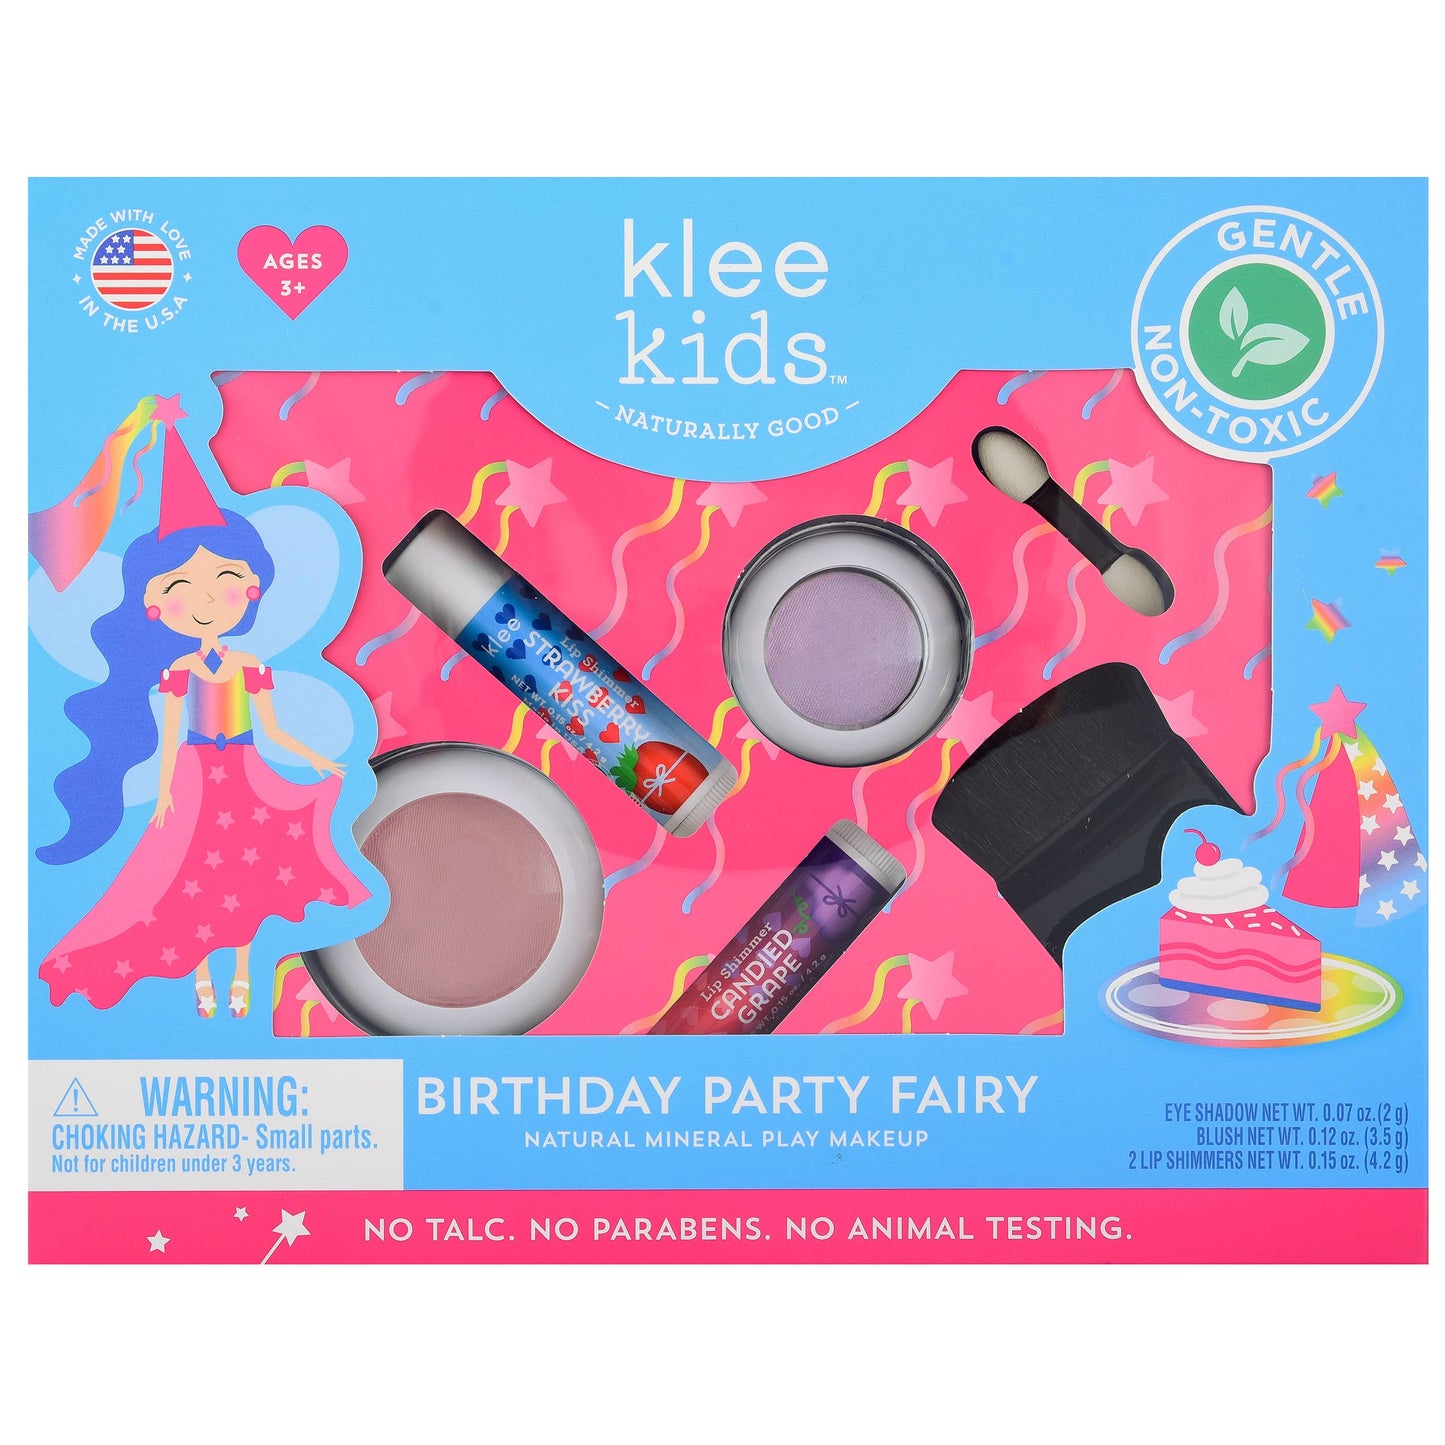 Enchanted Fairy - Klee Kids Natural Play Makeup 4-PC Kit: Princess Fairy